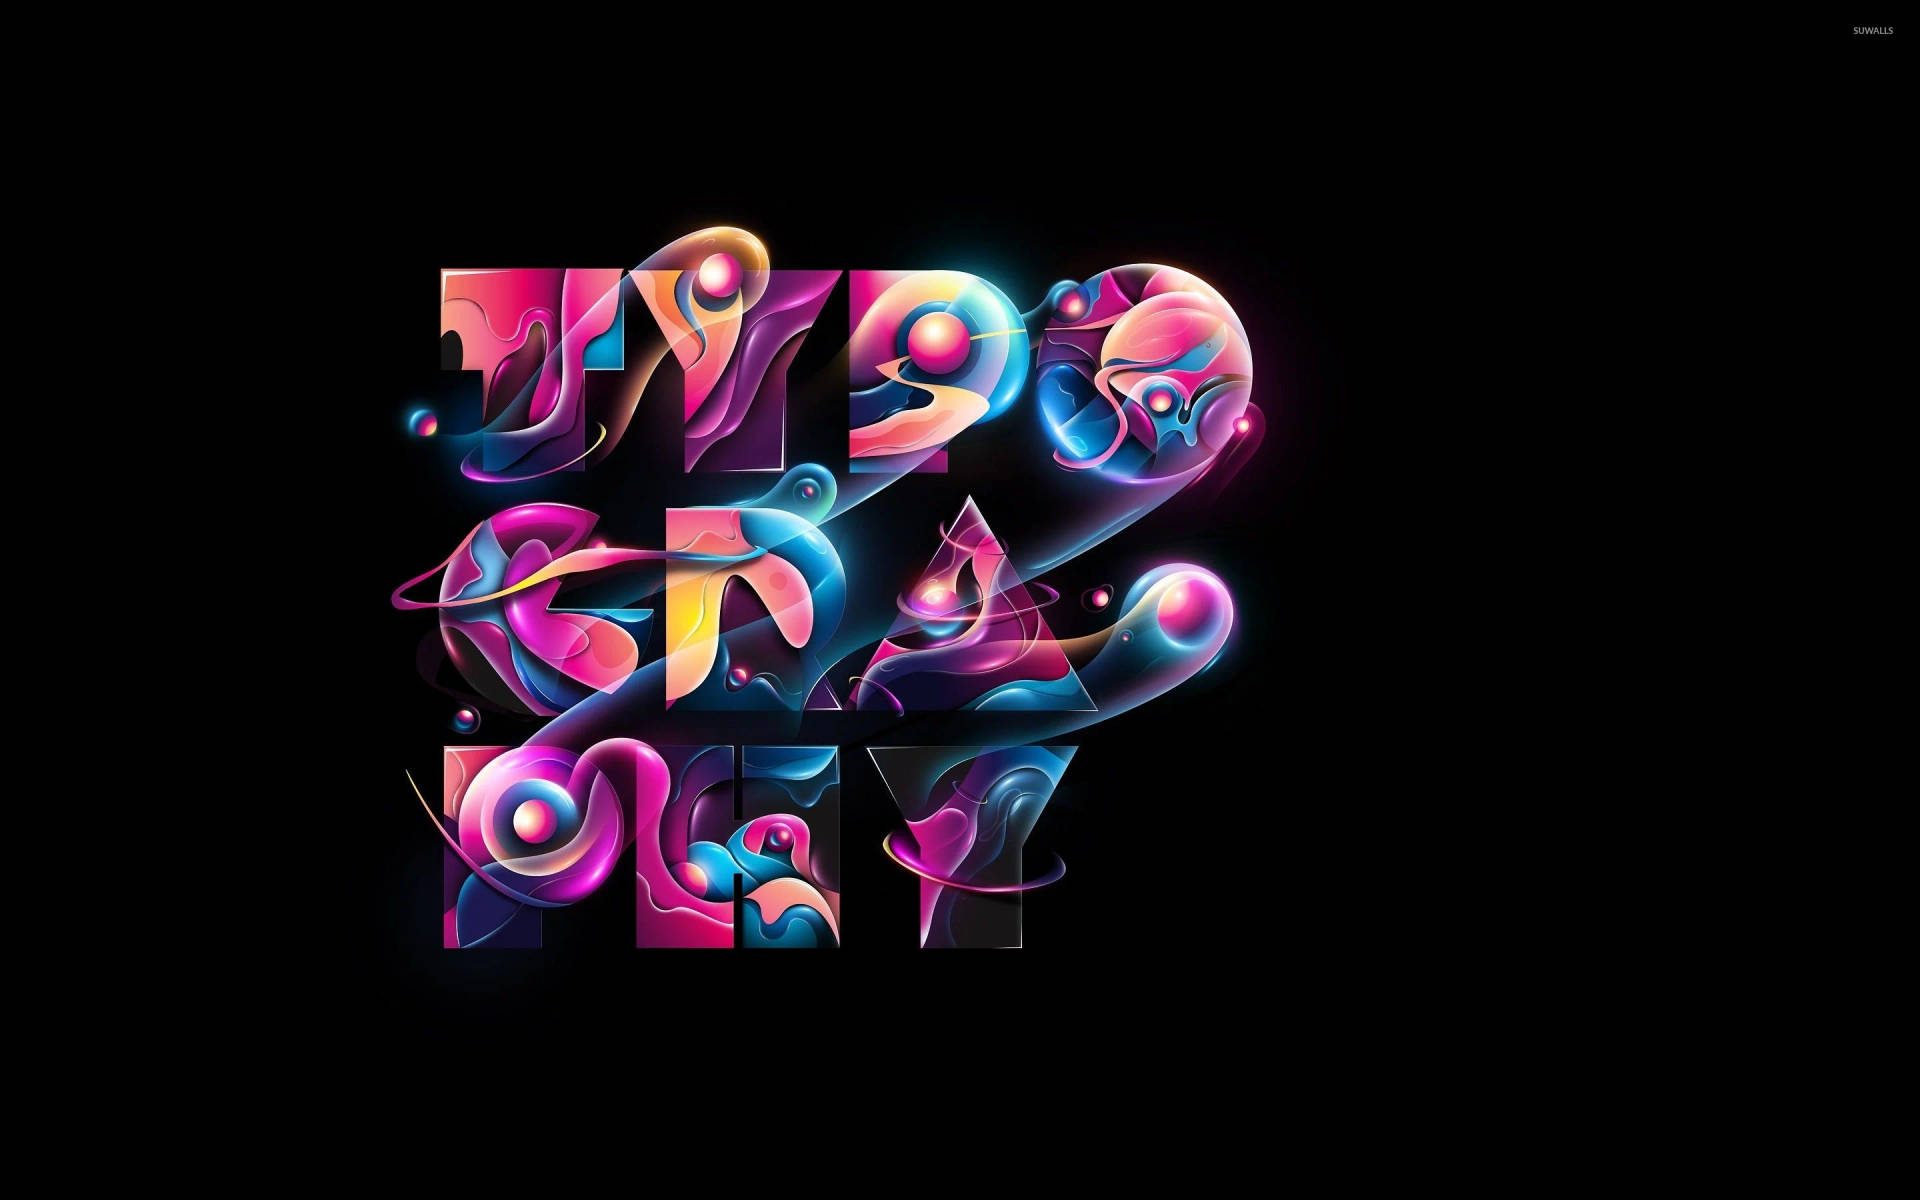 graphic design typography wallpaper